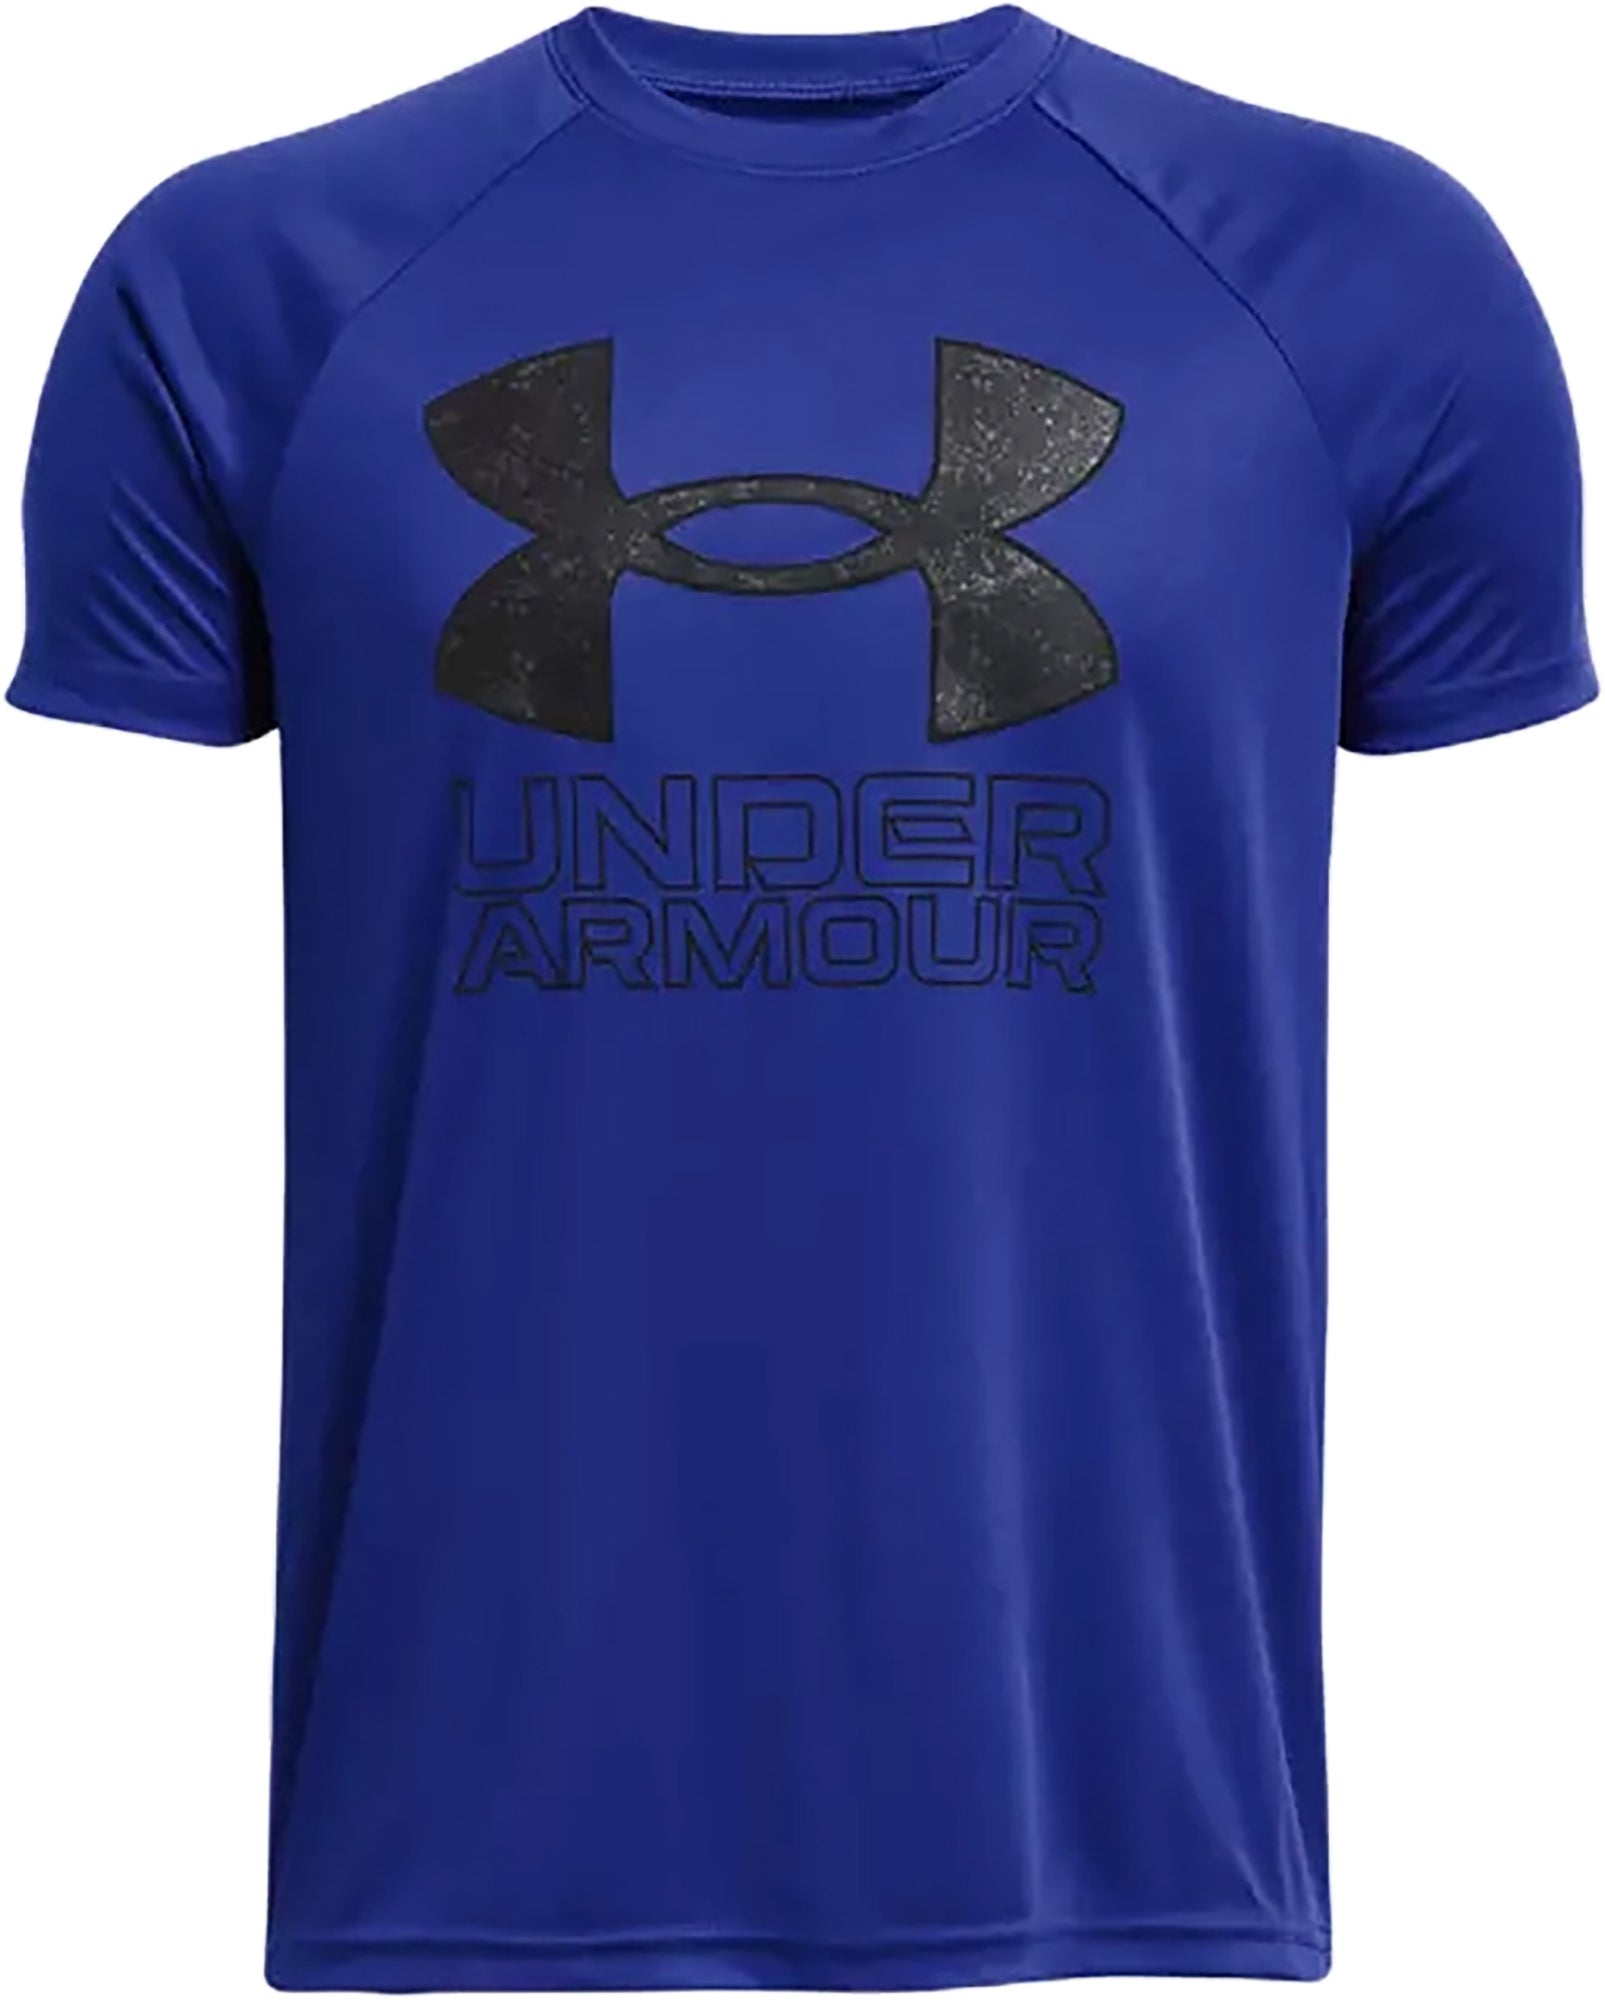 Under Armour UA Tech Hybrid Print Fill Short Sleeve Top - Boys XL Royal - Black